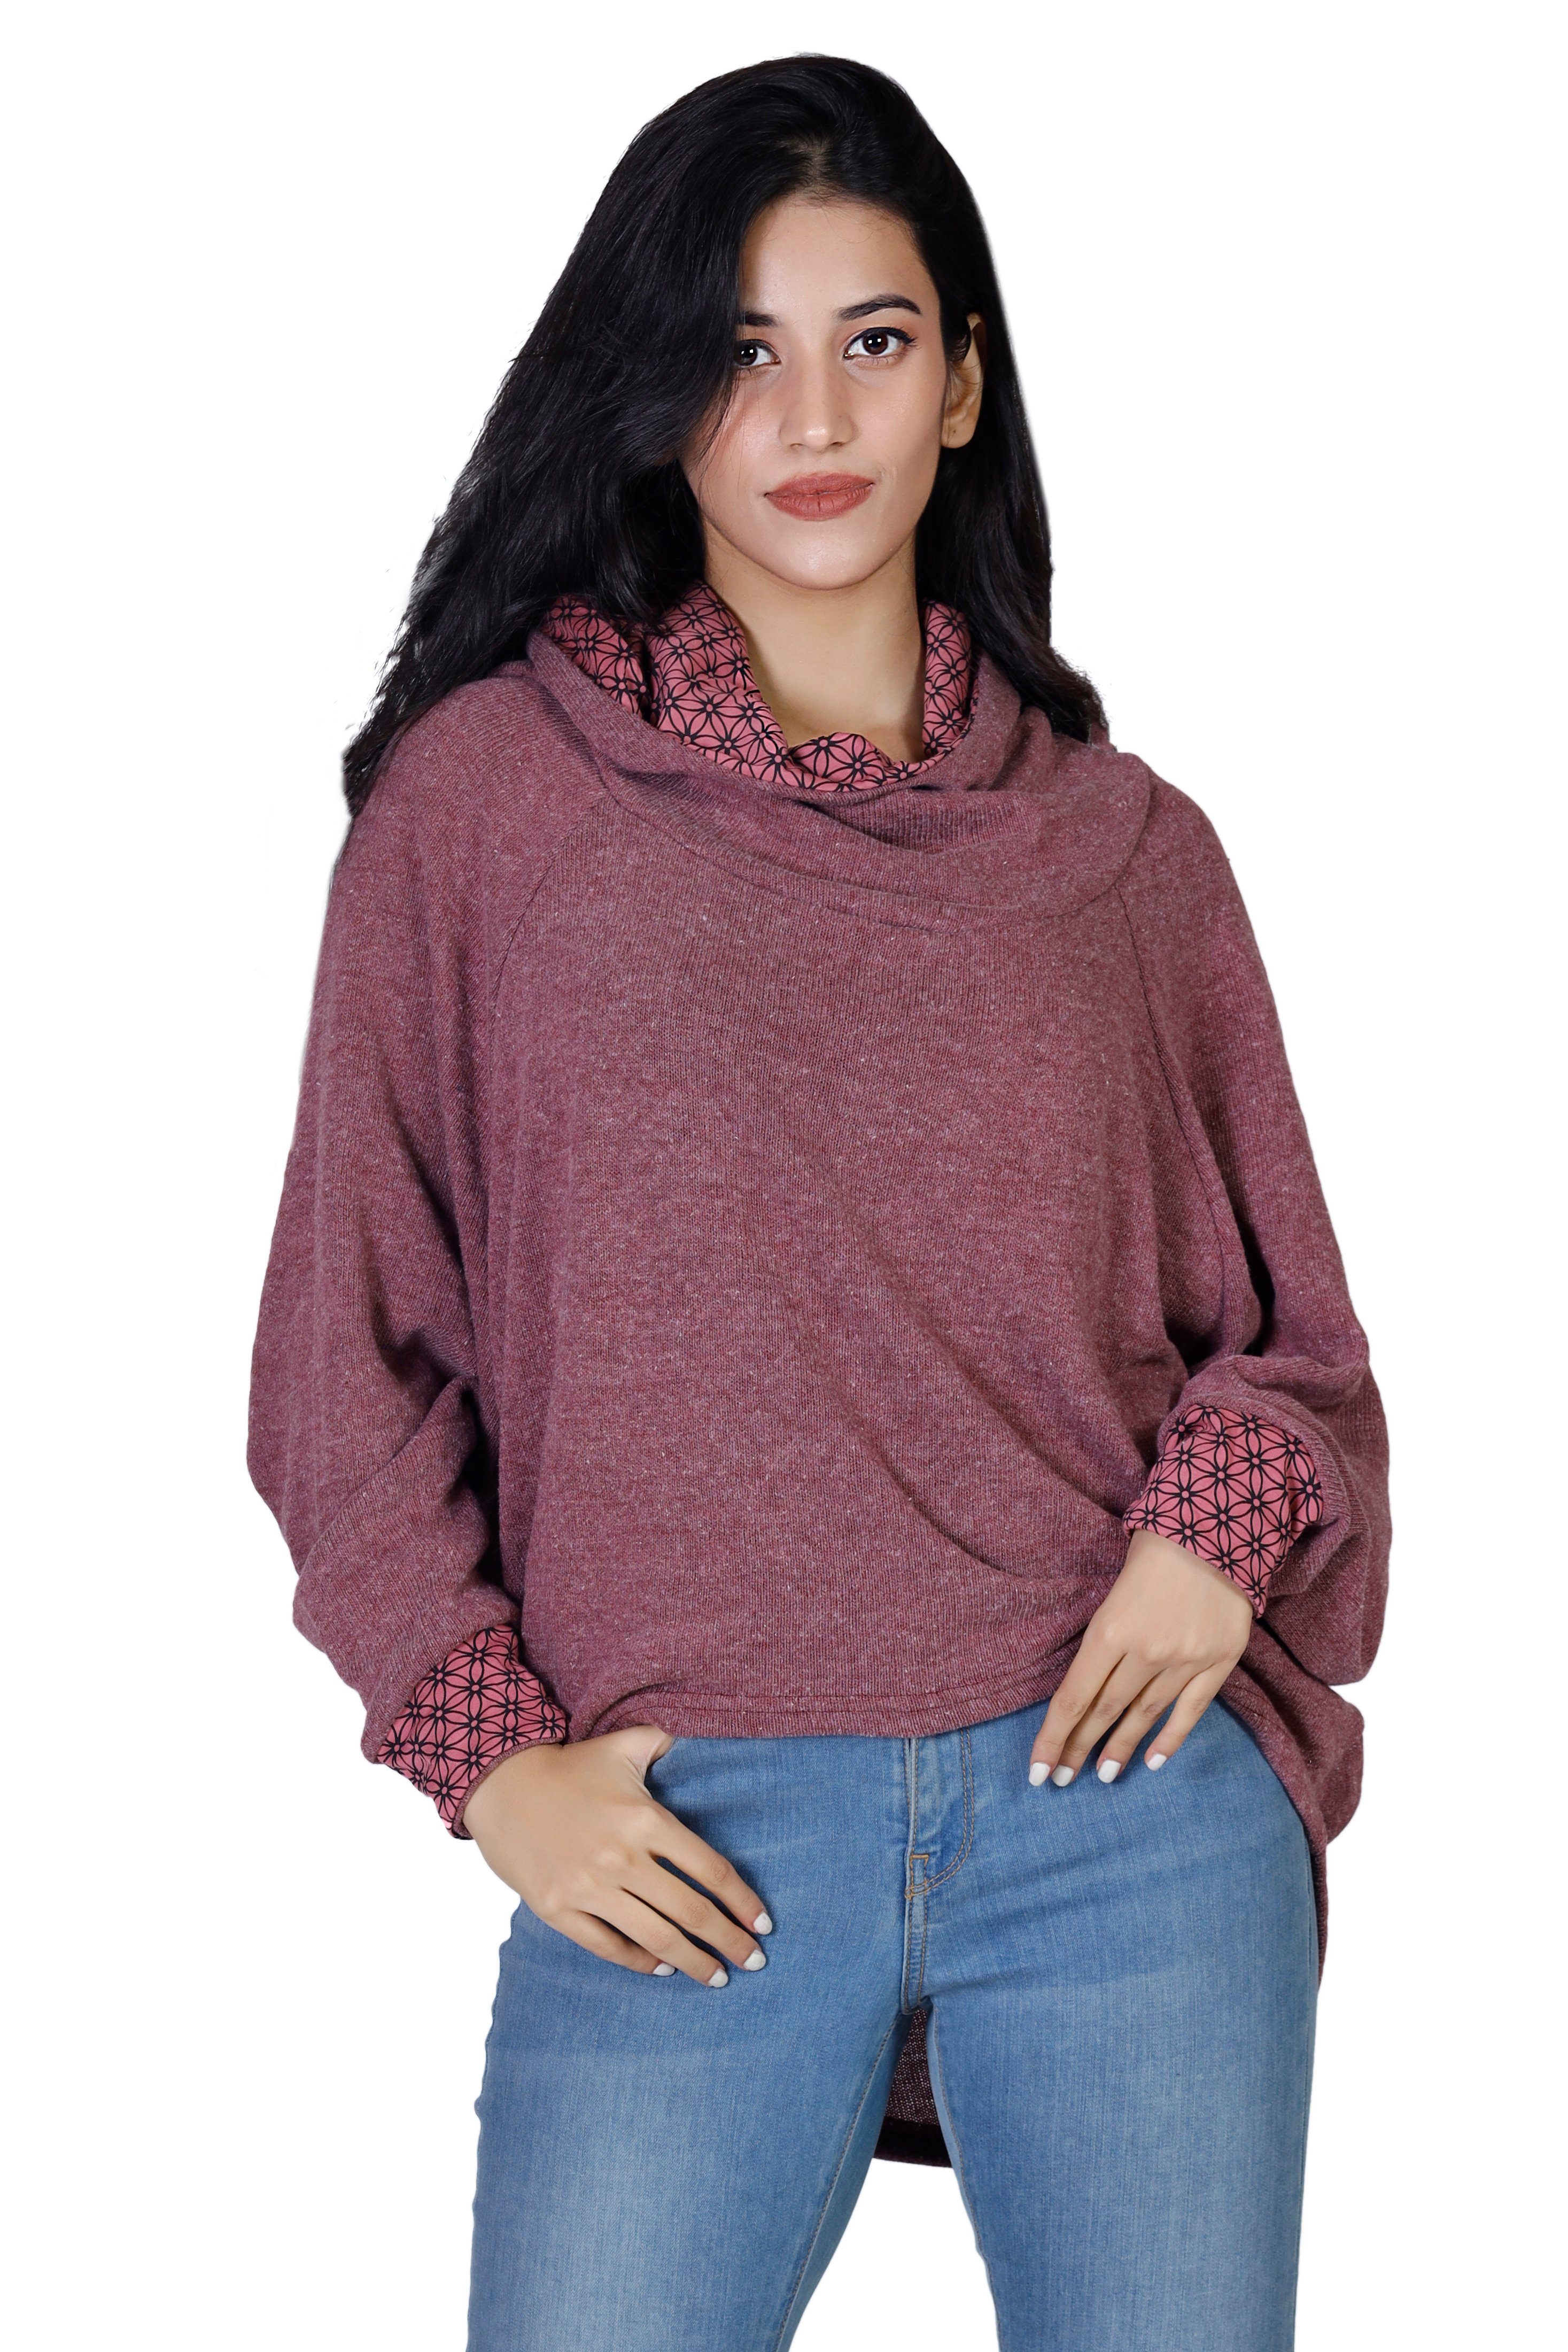 Guru-Shop Longsleeve Hoody, altrosa -.. Kapuzenpullover Bekleidung Pullover, alternative Sweatshirt